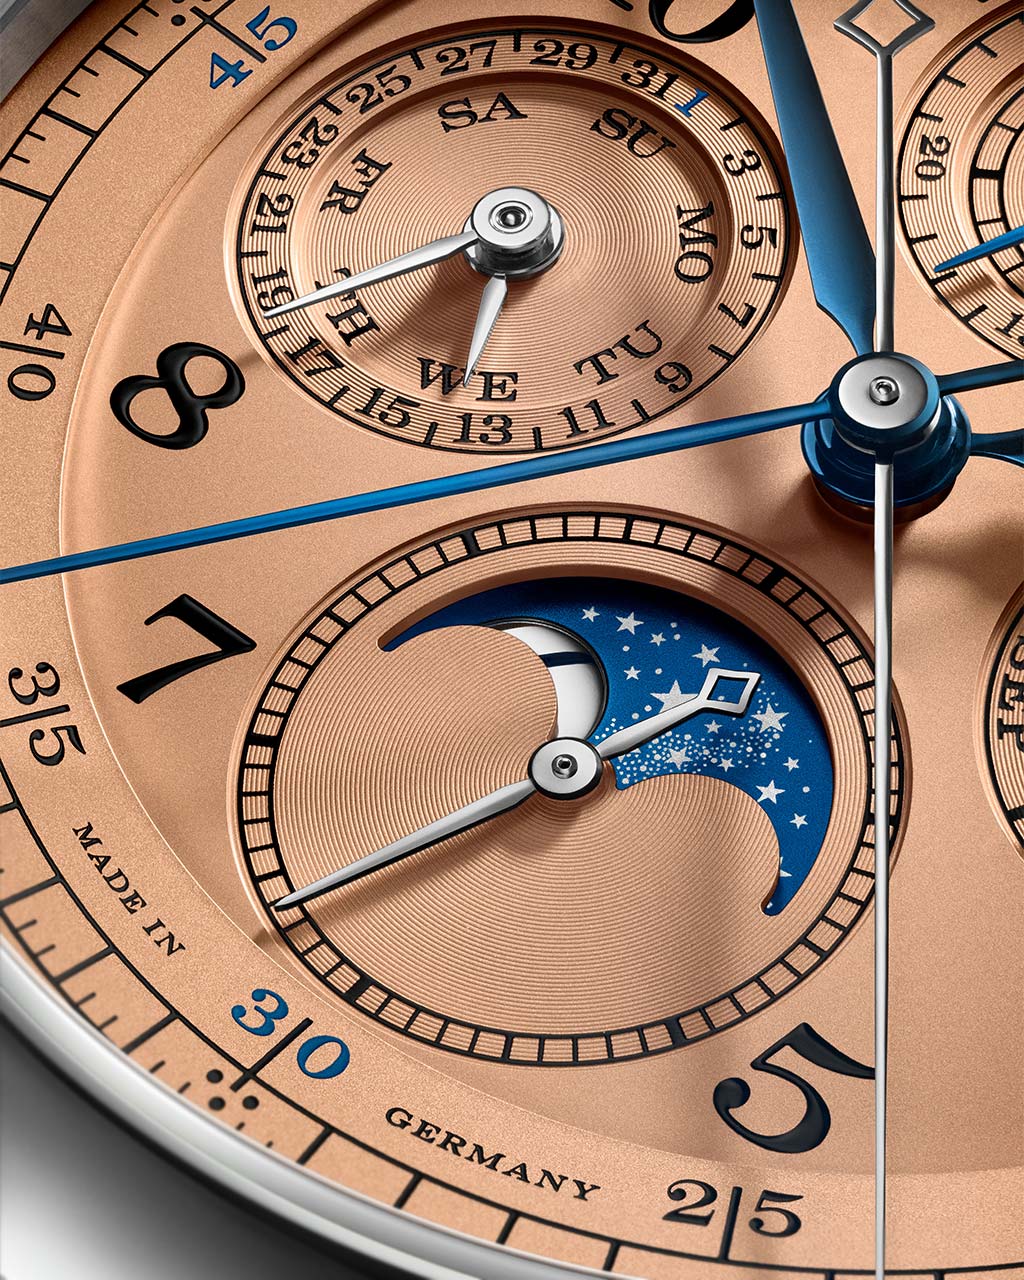 Ra mắt chiếc đồng hồ A. Lange & Söhne - 1815 Rattrapante Perpetual Calendar